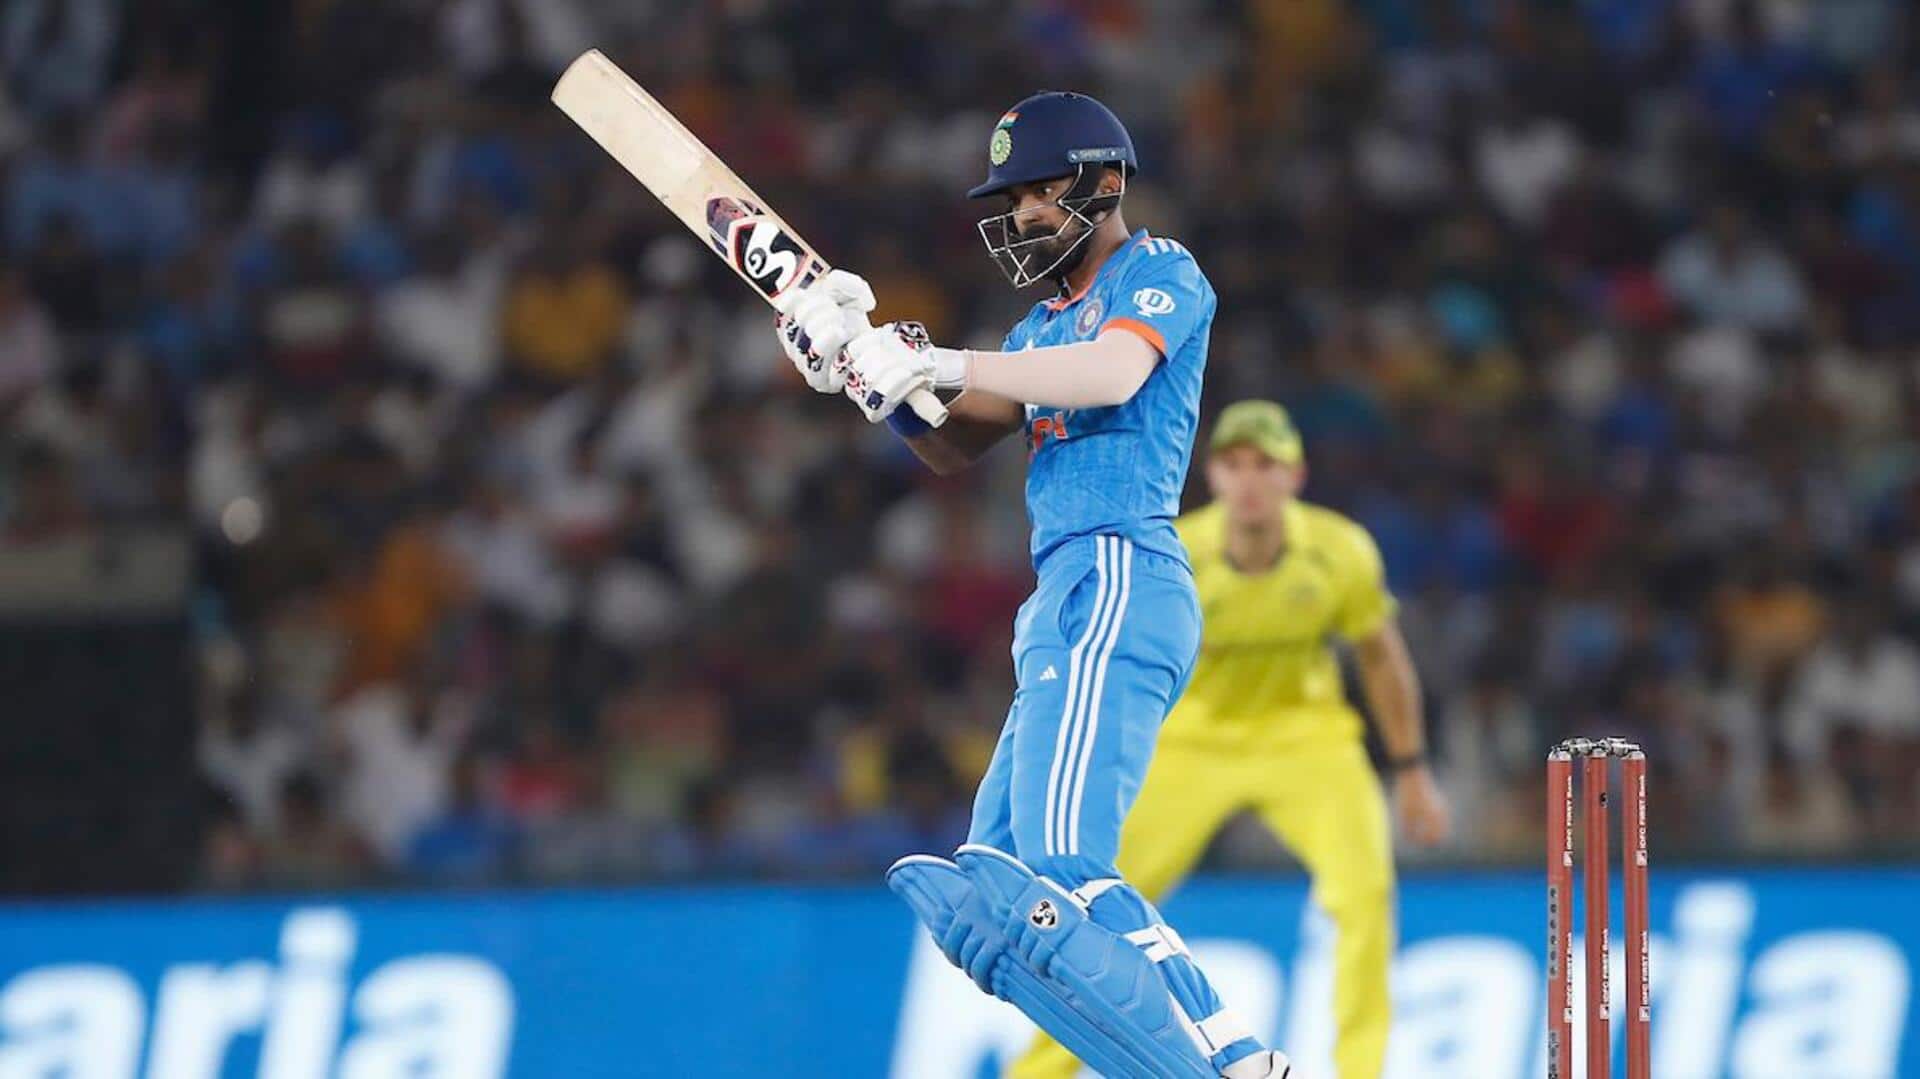 KL Rahul slams his fourth ODI half-century against Australia: Stats